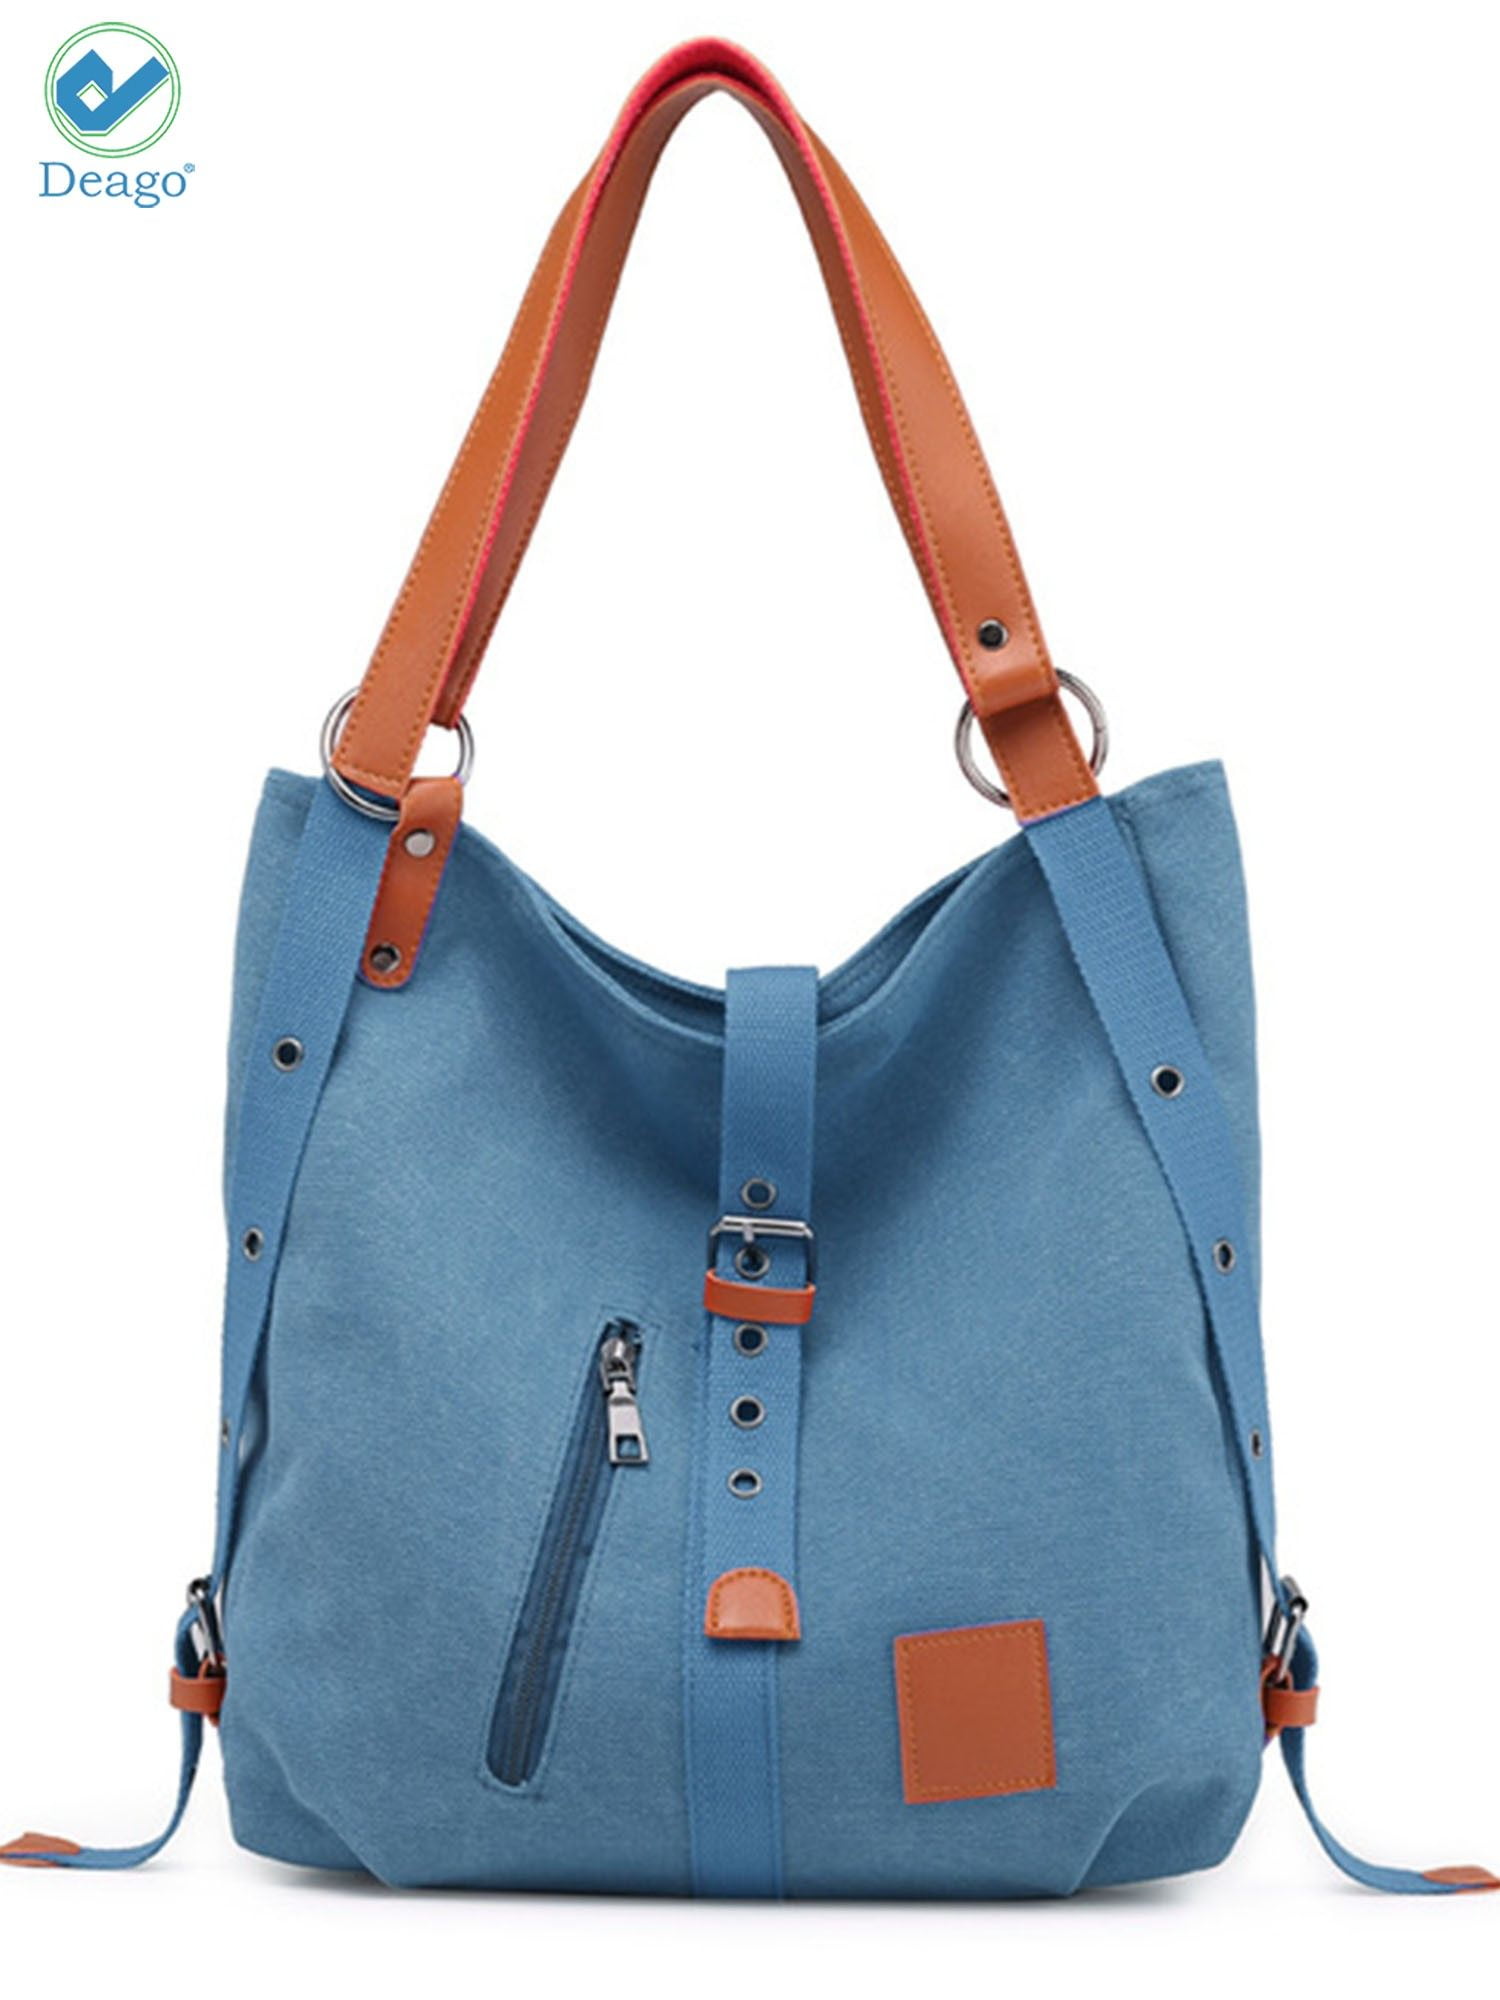 Deago Purse Handbag for Women Canvas Tote Bag Casual Shoulder Bag ...